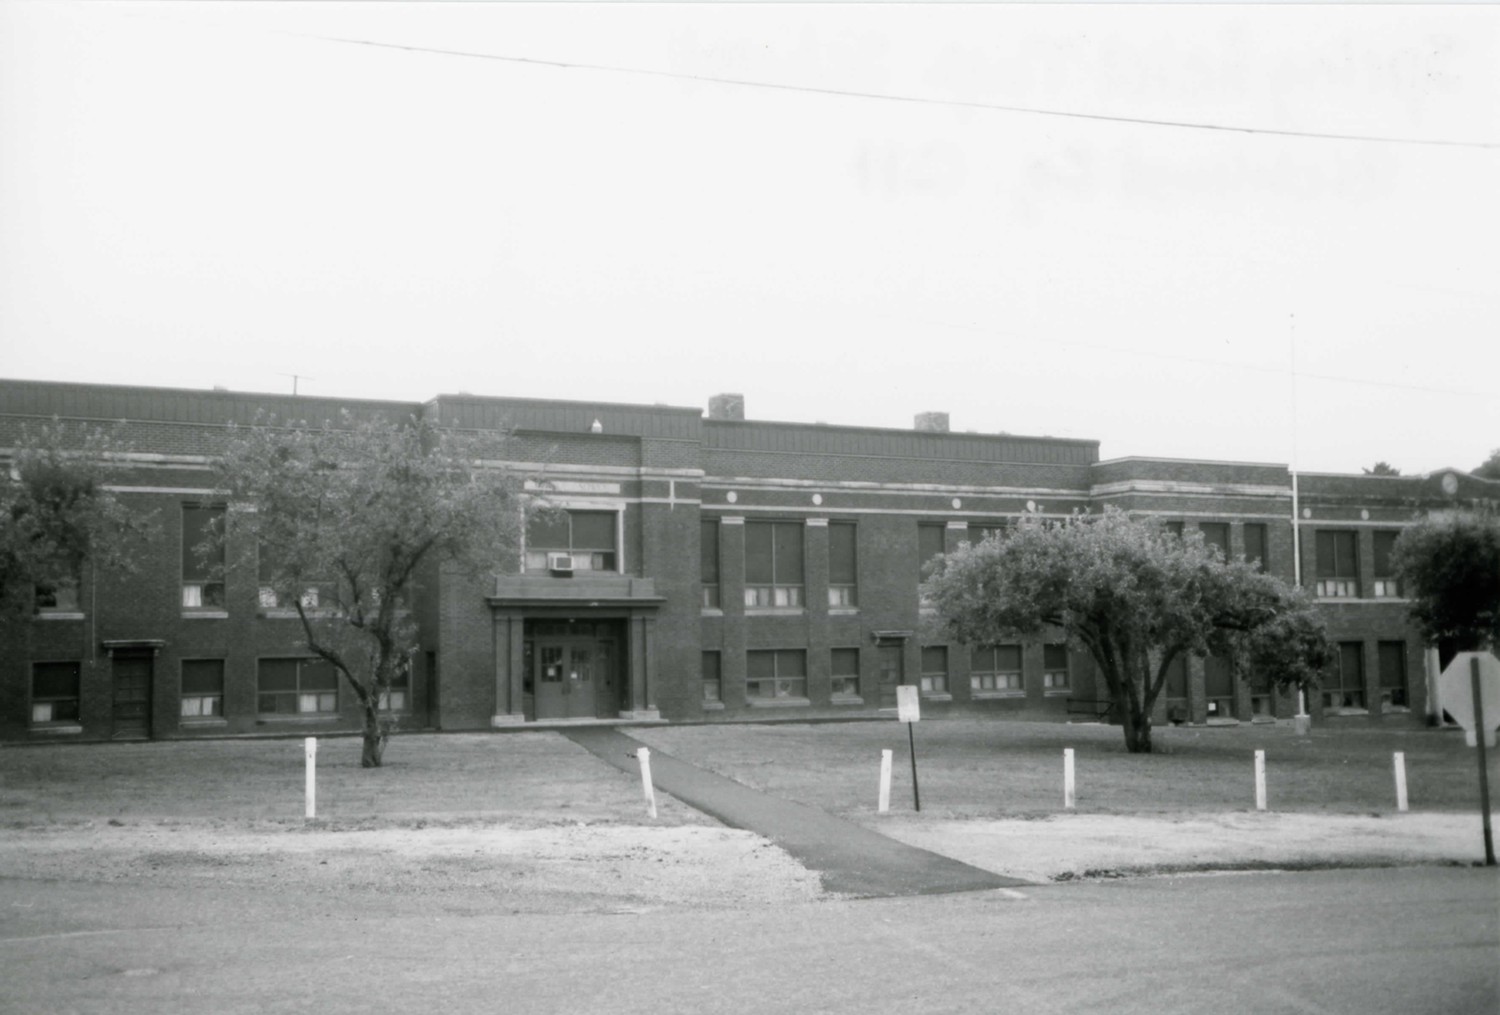 Springfield Township School, Ontario Ohio Monroe Township School and High School Annex, Lucas, Jackson Township, Ohio (2002)